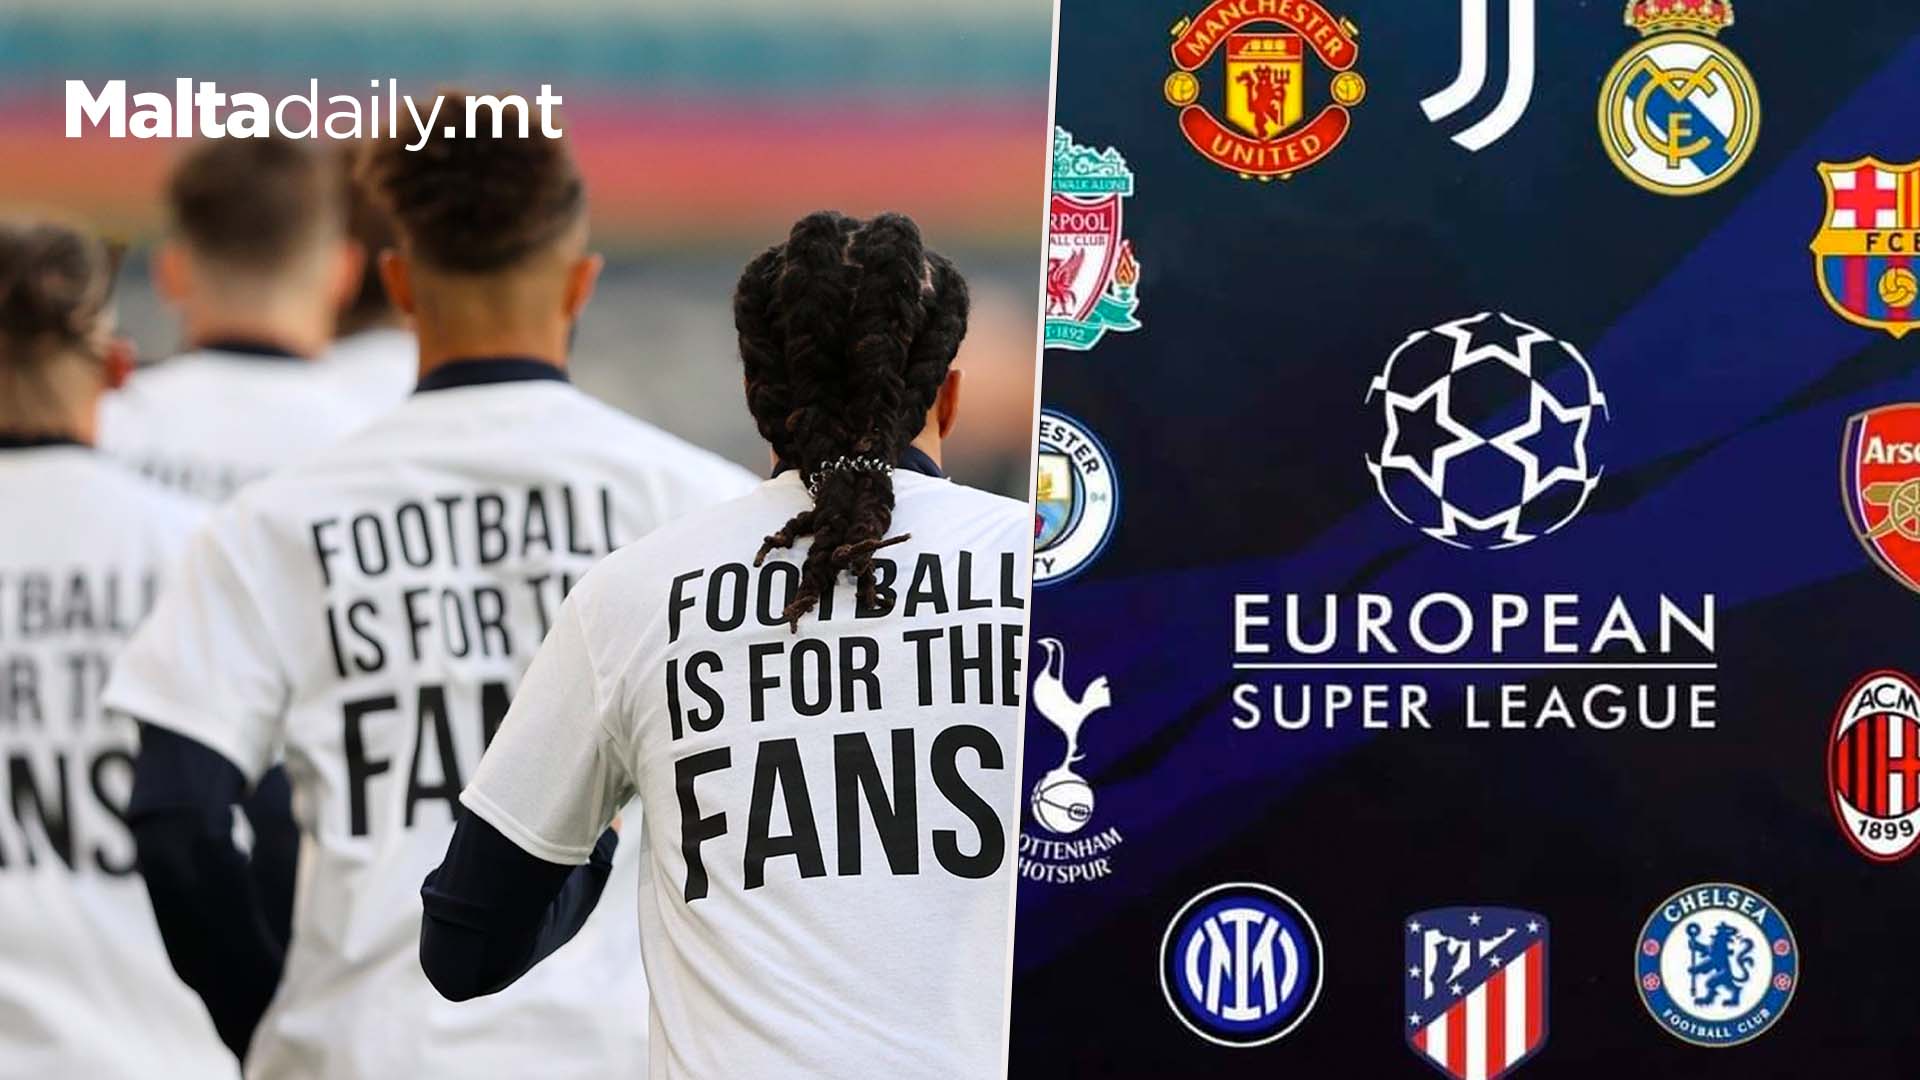 UEFA & FIFA's Blocking Of Super League Broke EU Law